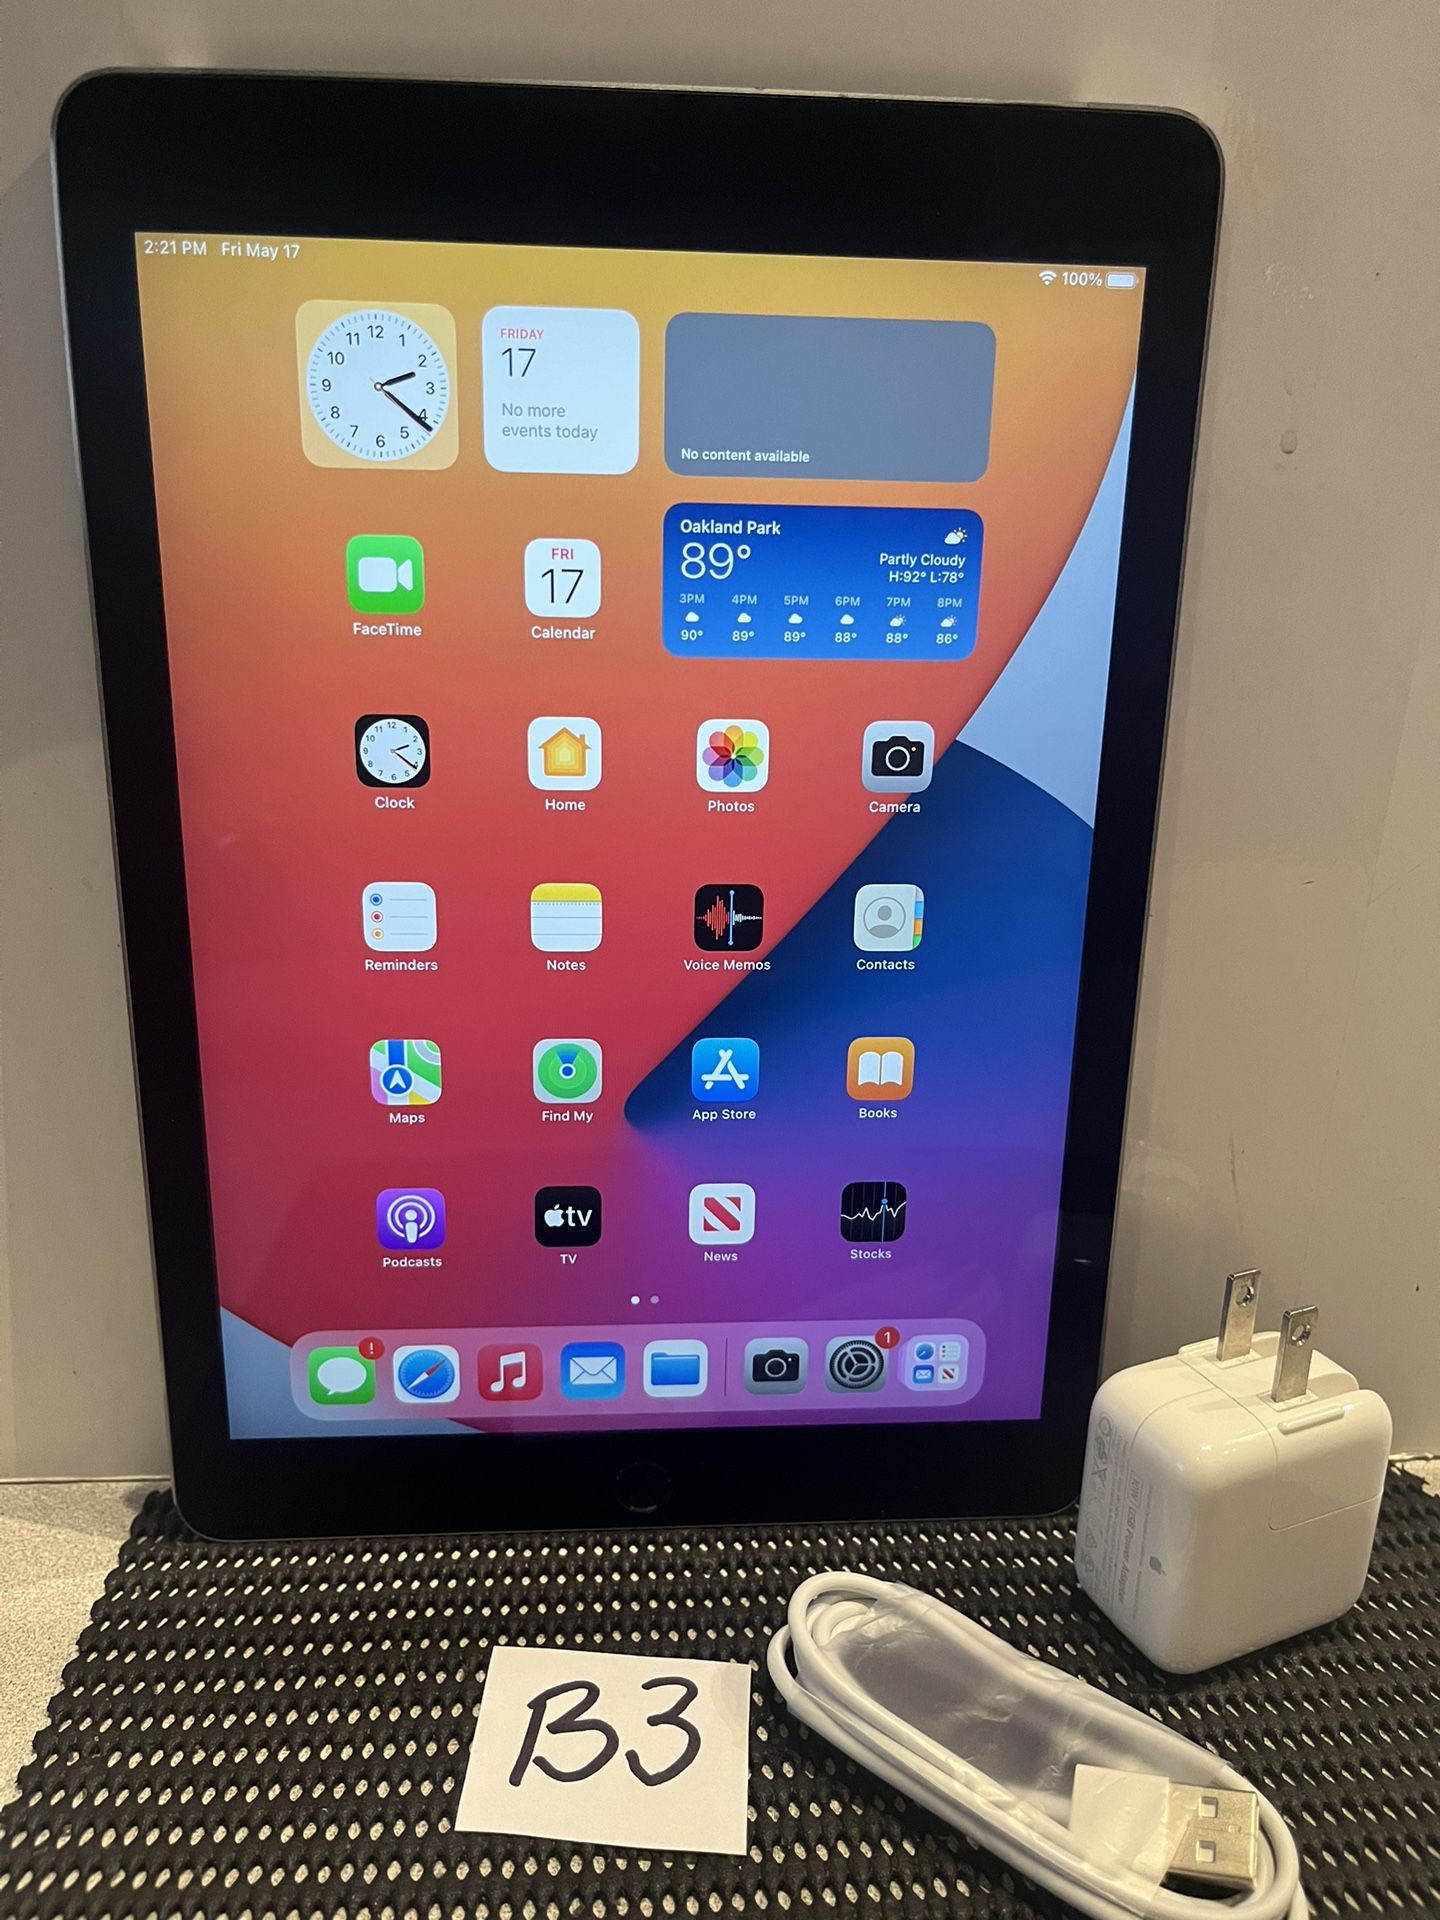 Apple iPad AIR 2 16GB WiFi + Cellular UNLOCKED 9.7” iPad—Space Gray complete